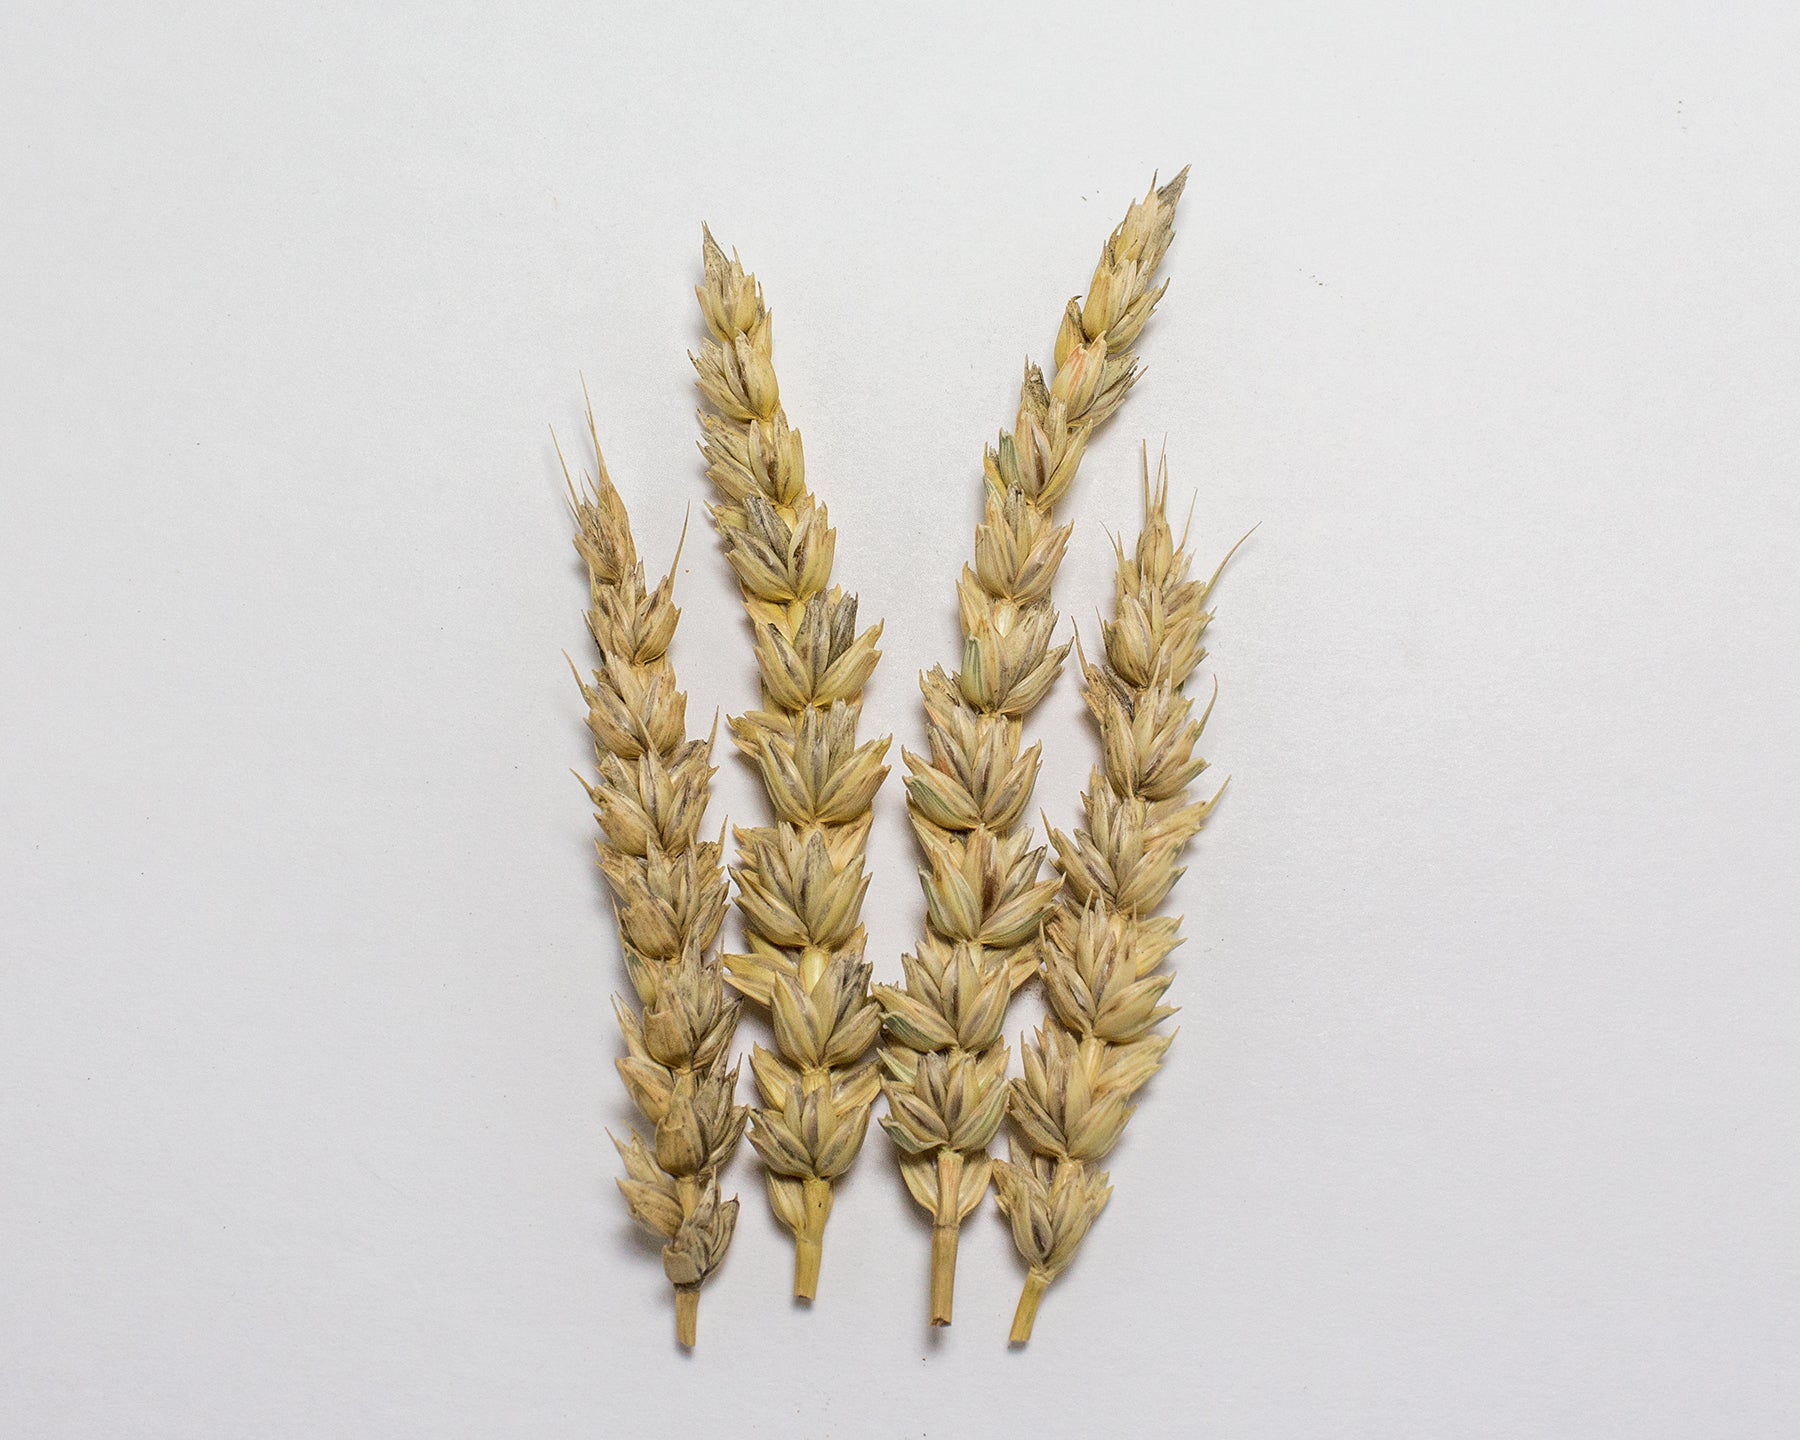 Wheat (Bread) - Chinook